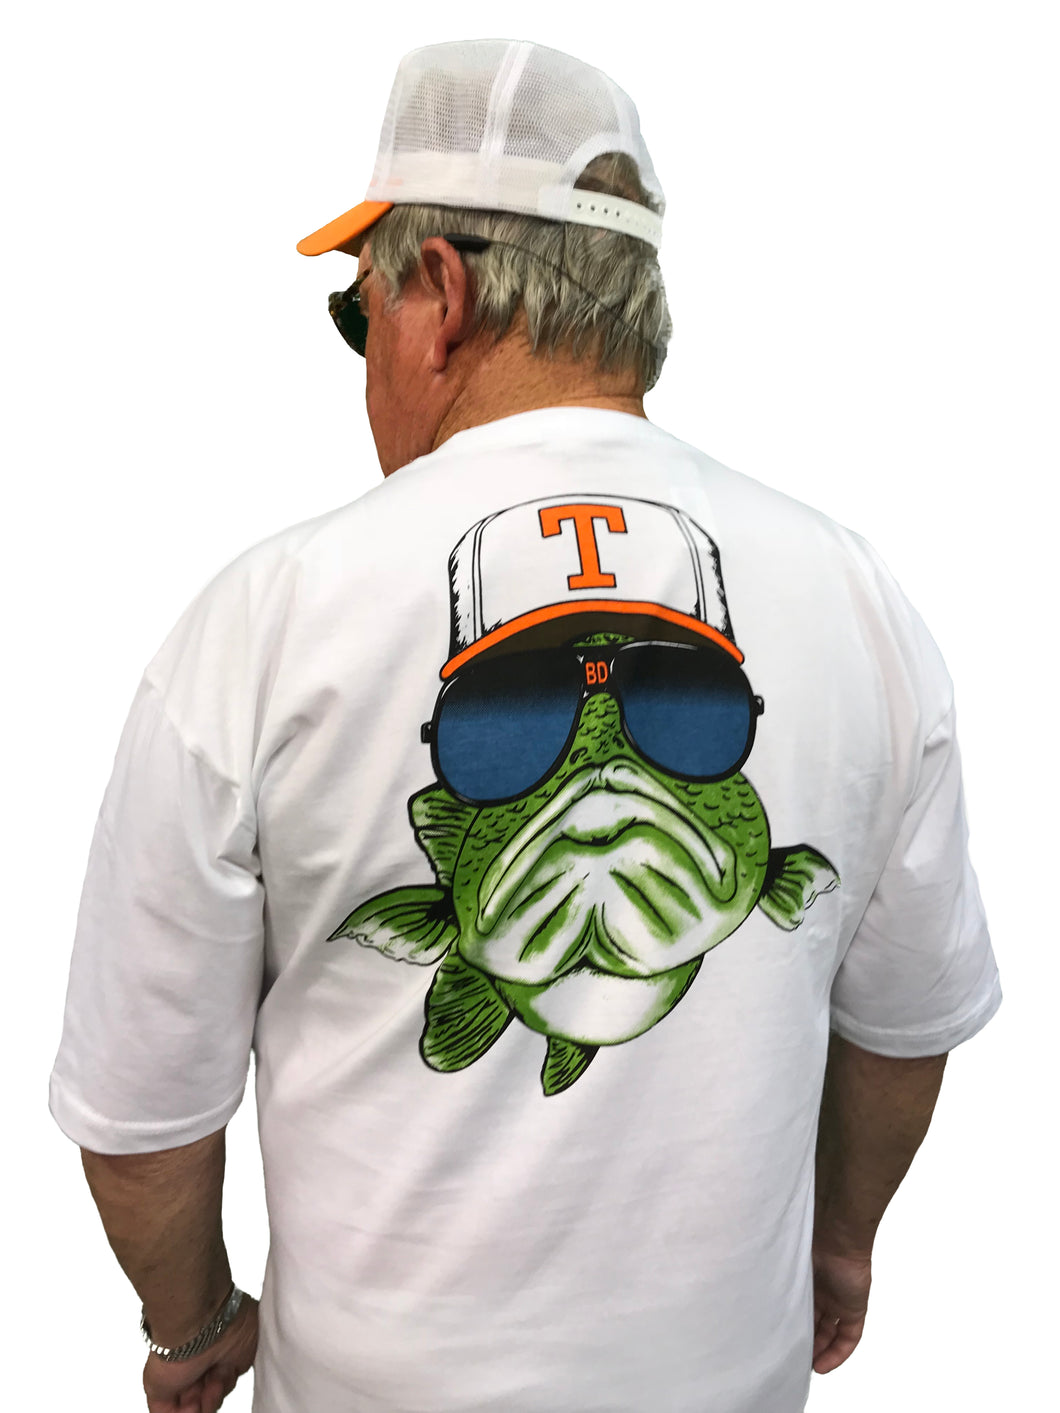 Back profile of the Bill Dance short sleeve logo t-shirt in white showing the Bill Dance cartoon bass logo